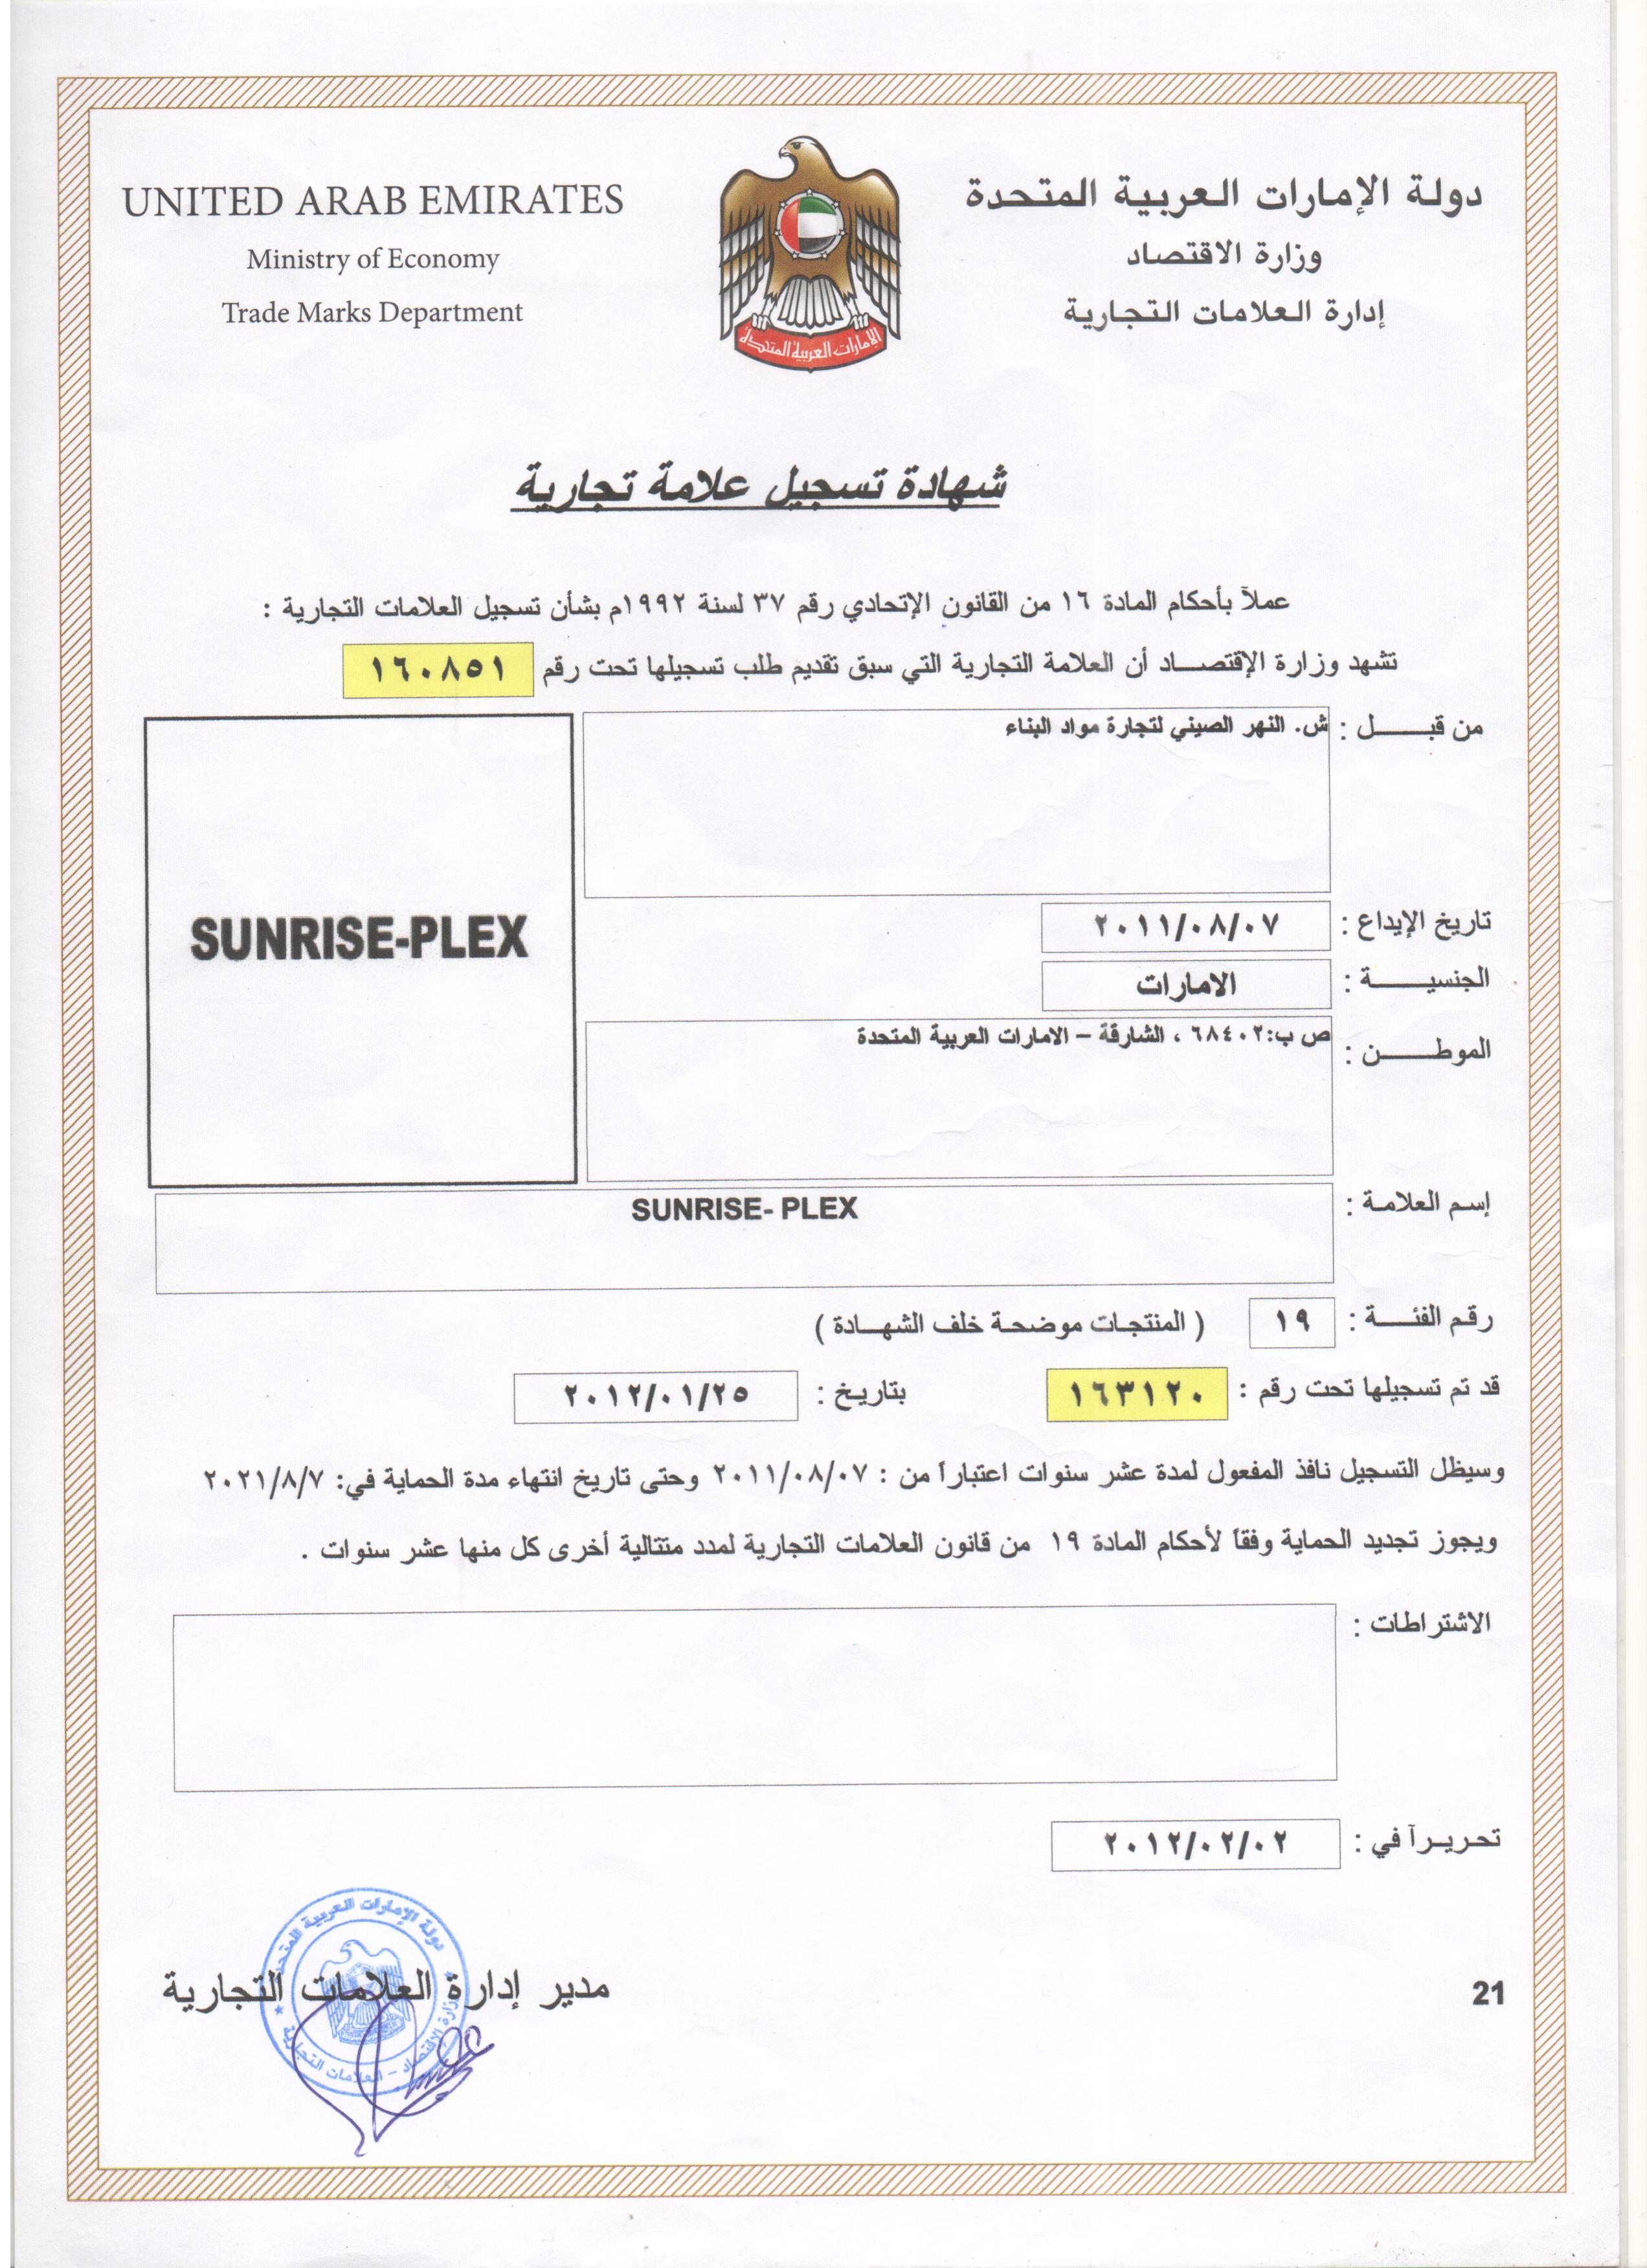 sunrise-plex-trade-mark-deparment-certificate-uae